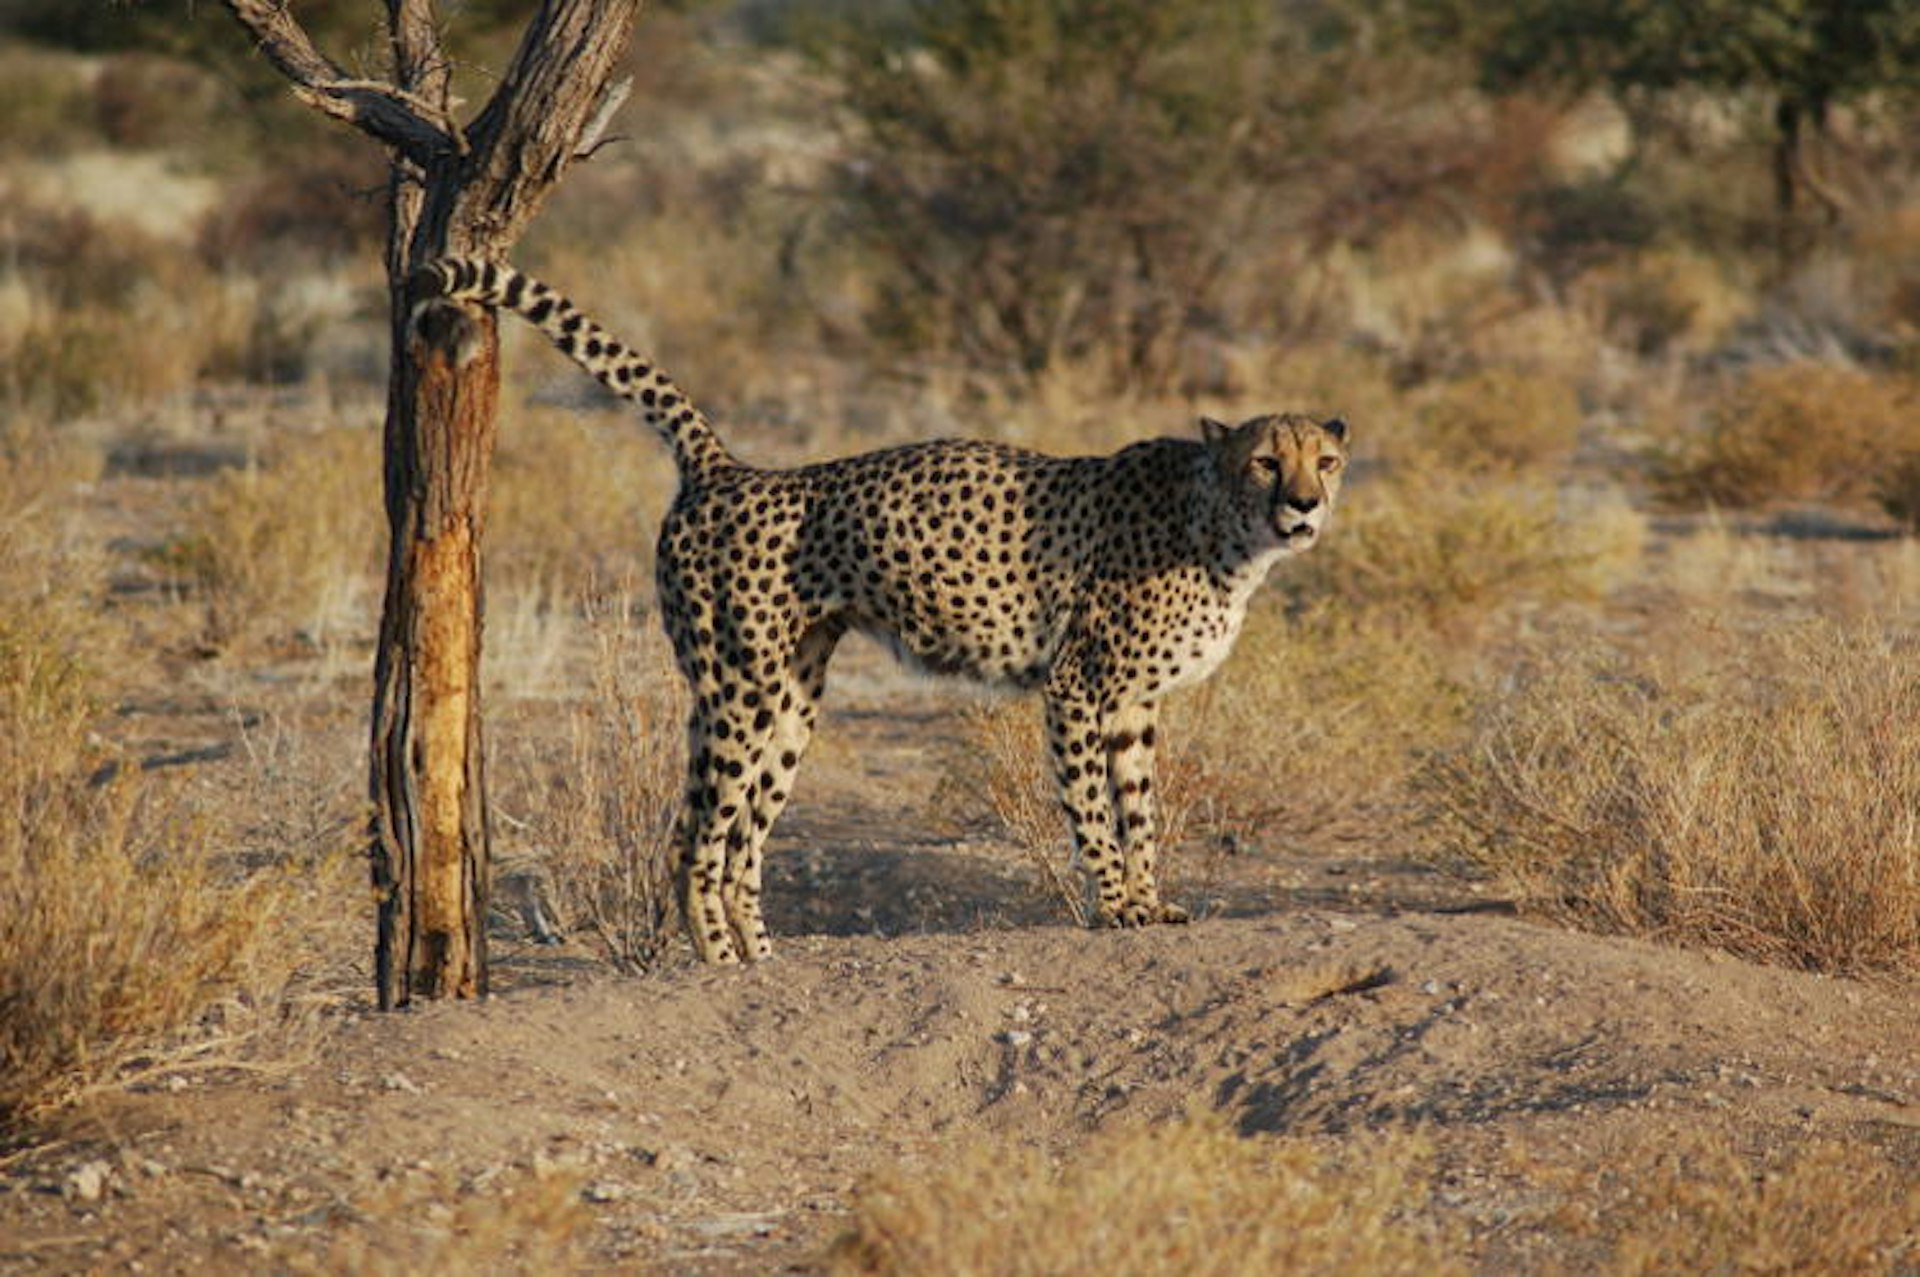 A cheetah spraying to mark its territory, Namibia. Image by  Joachim Huber / CC BY-SA 2.0